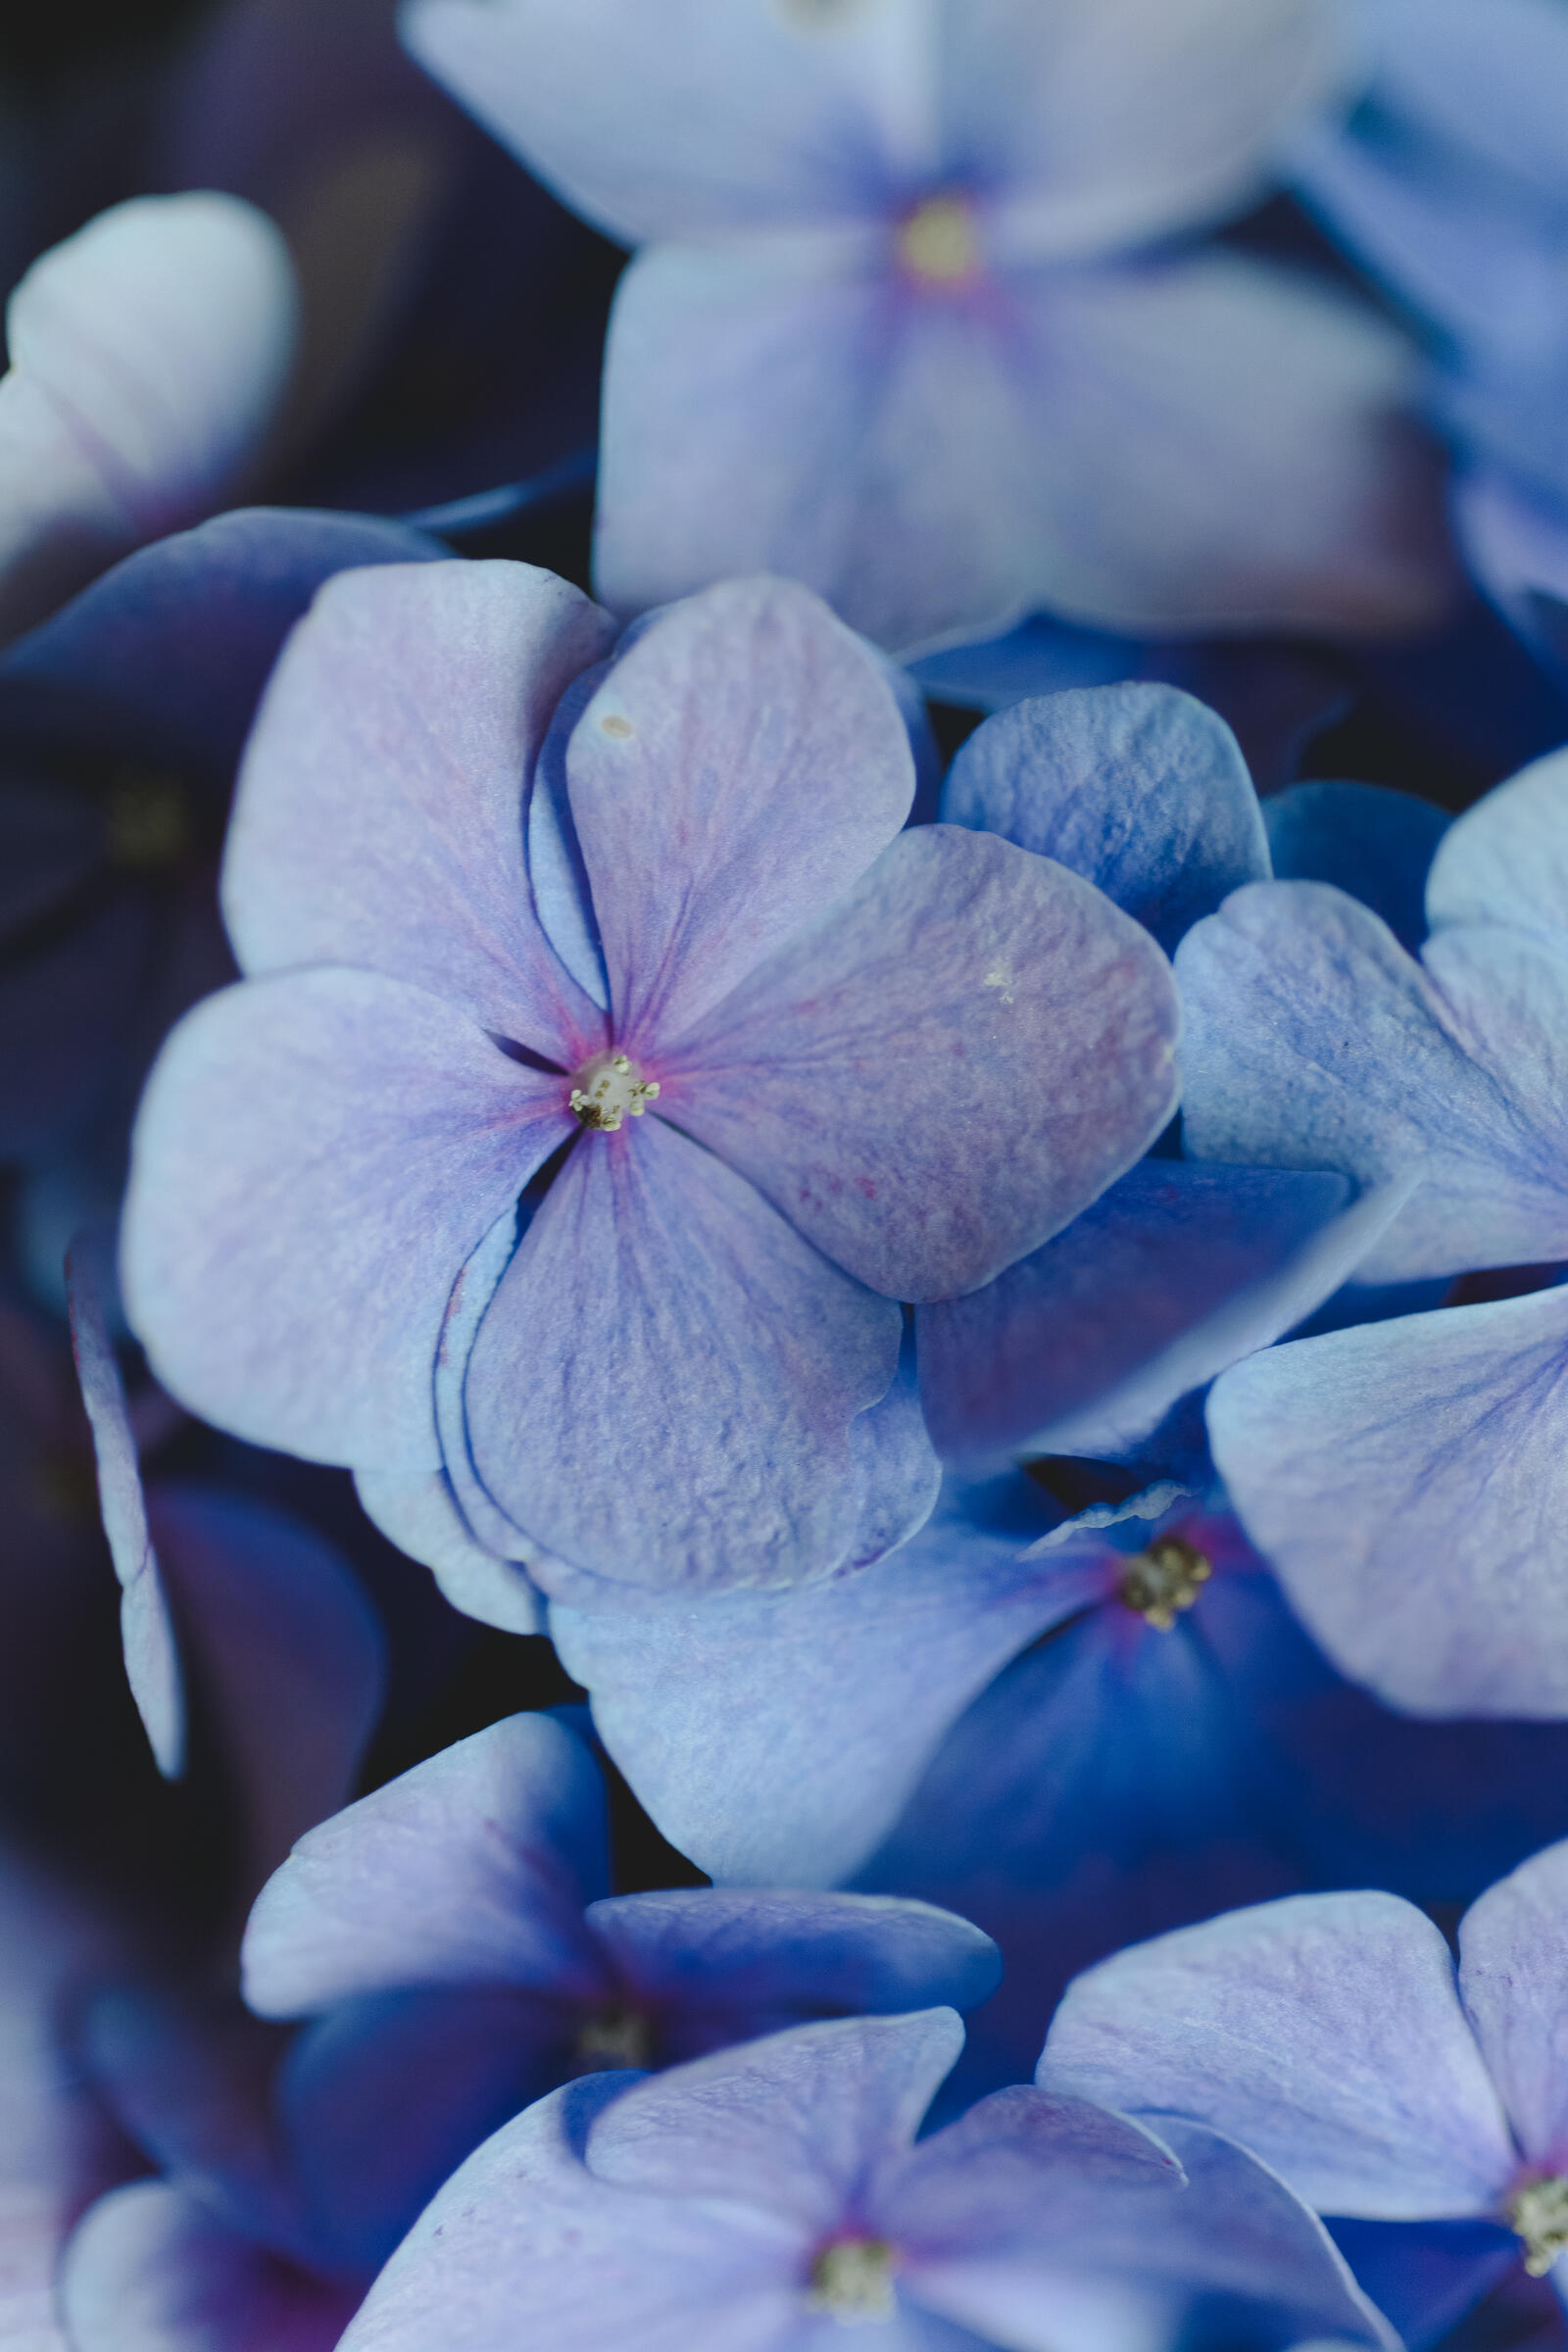 Wallpapers plante plant blue flowers on the desktop